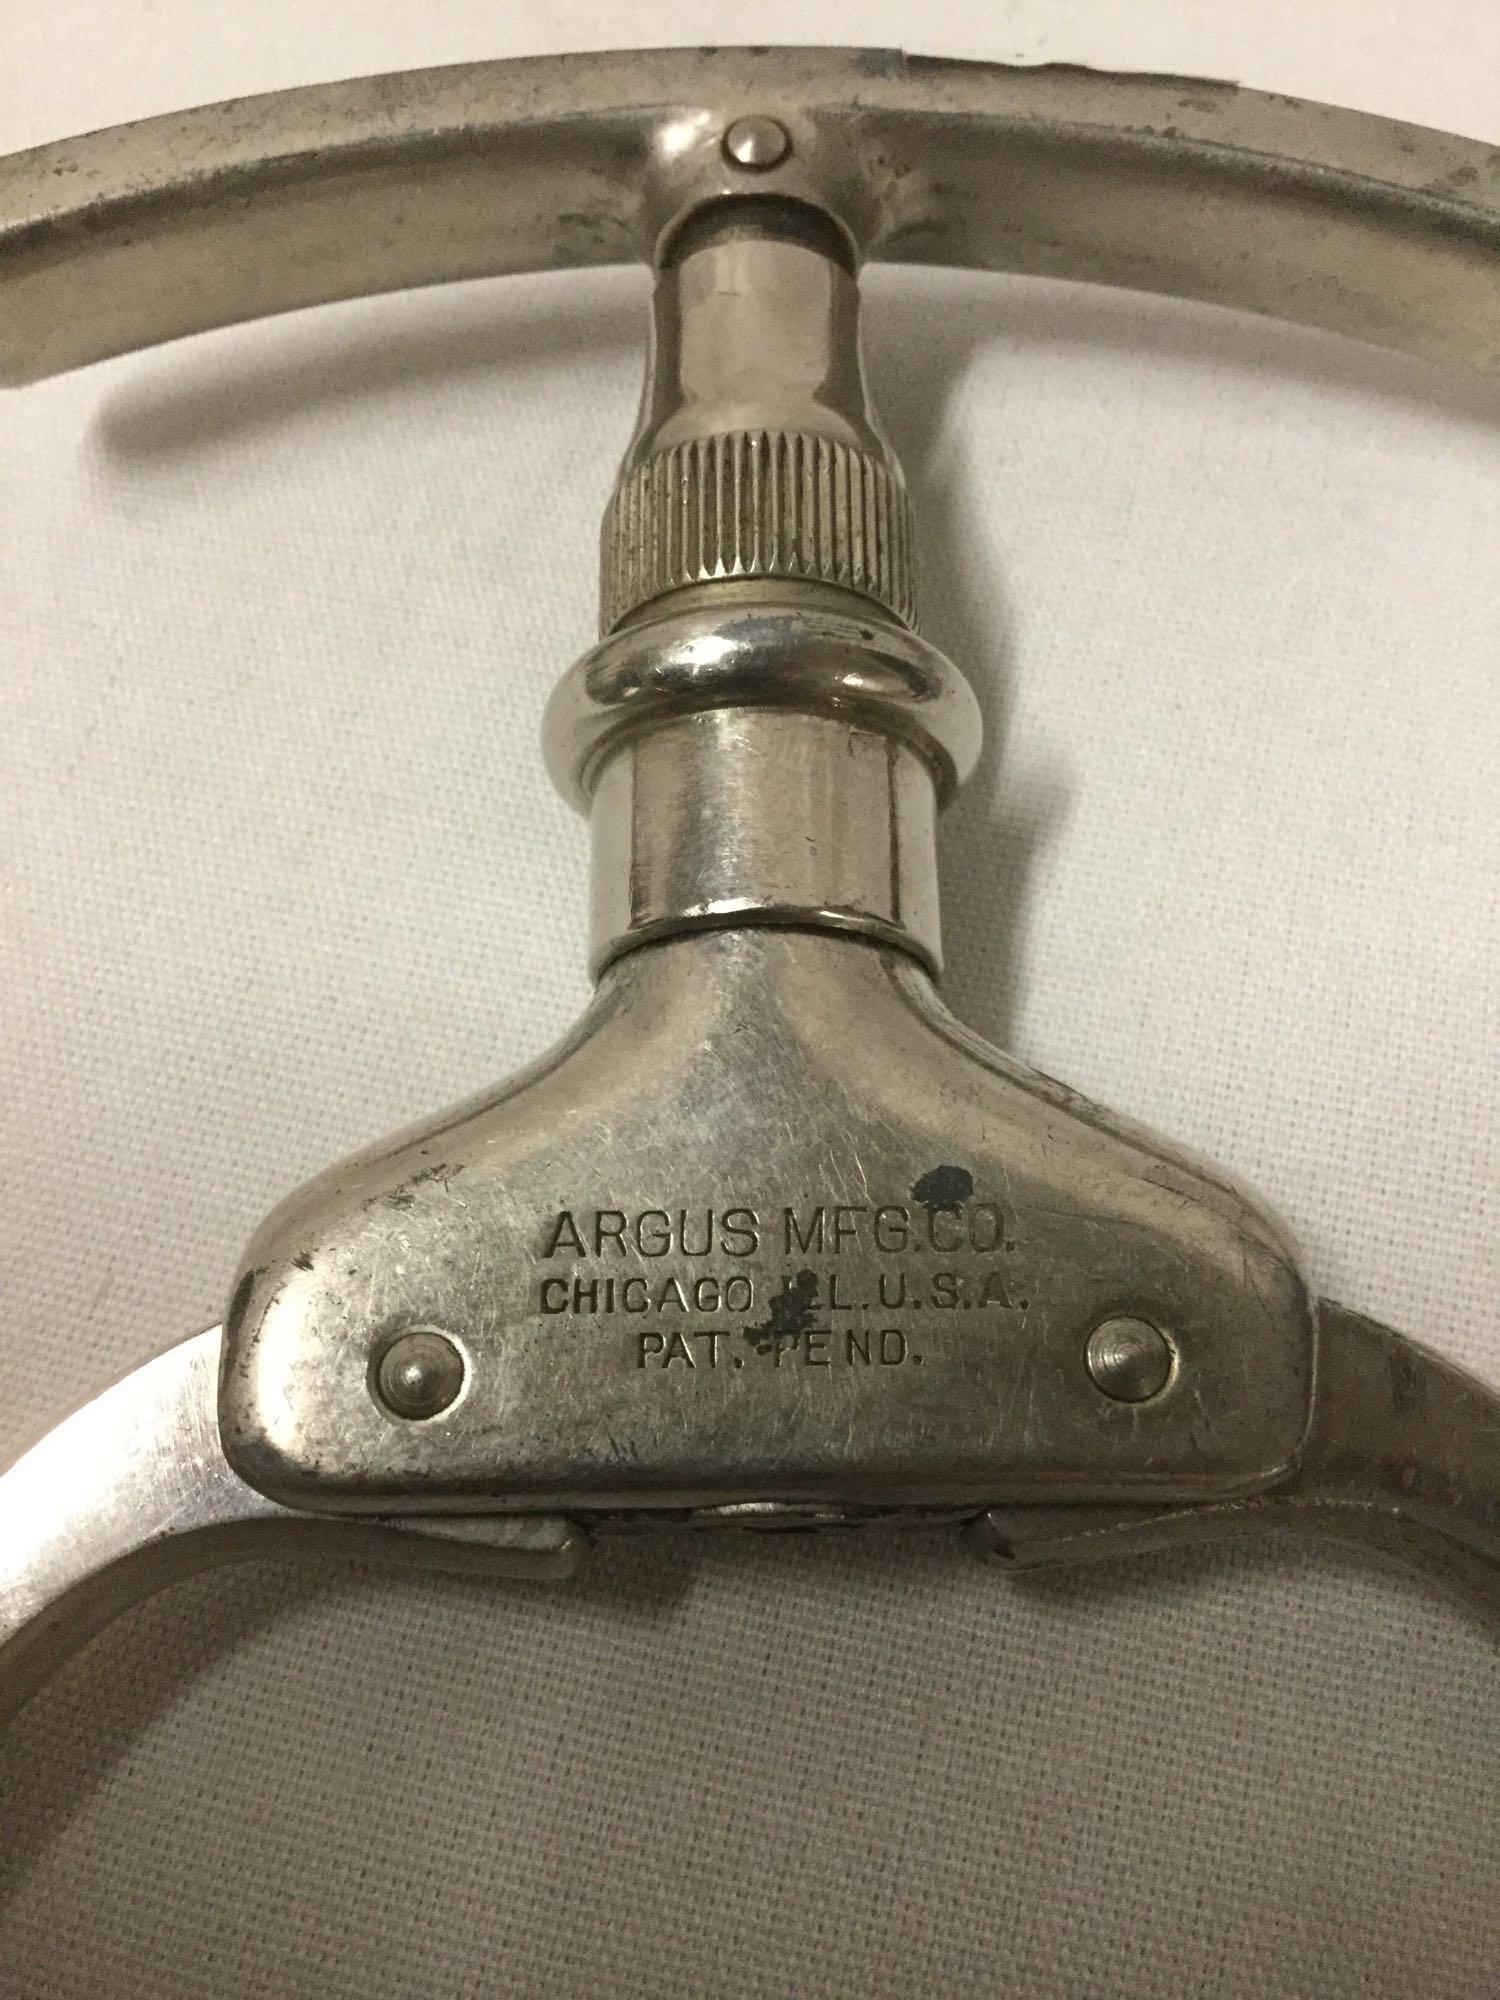 3 law enforcement items - Argus MFG The Iron Claw wrist cuff, 1912 Peerless hand cuffs + nightstick